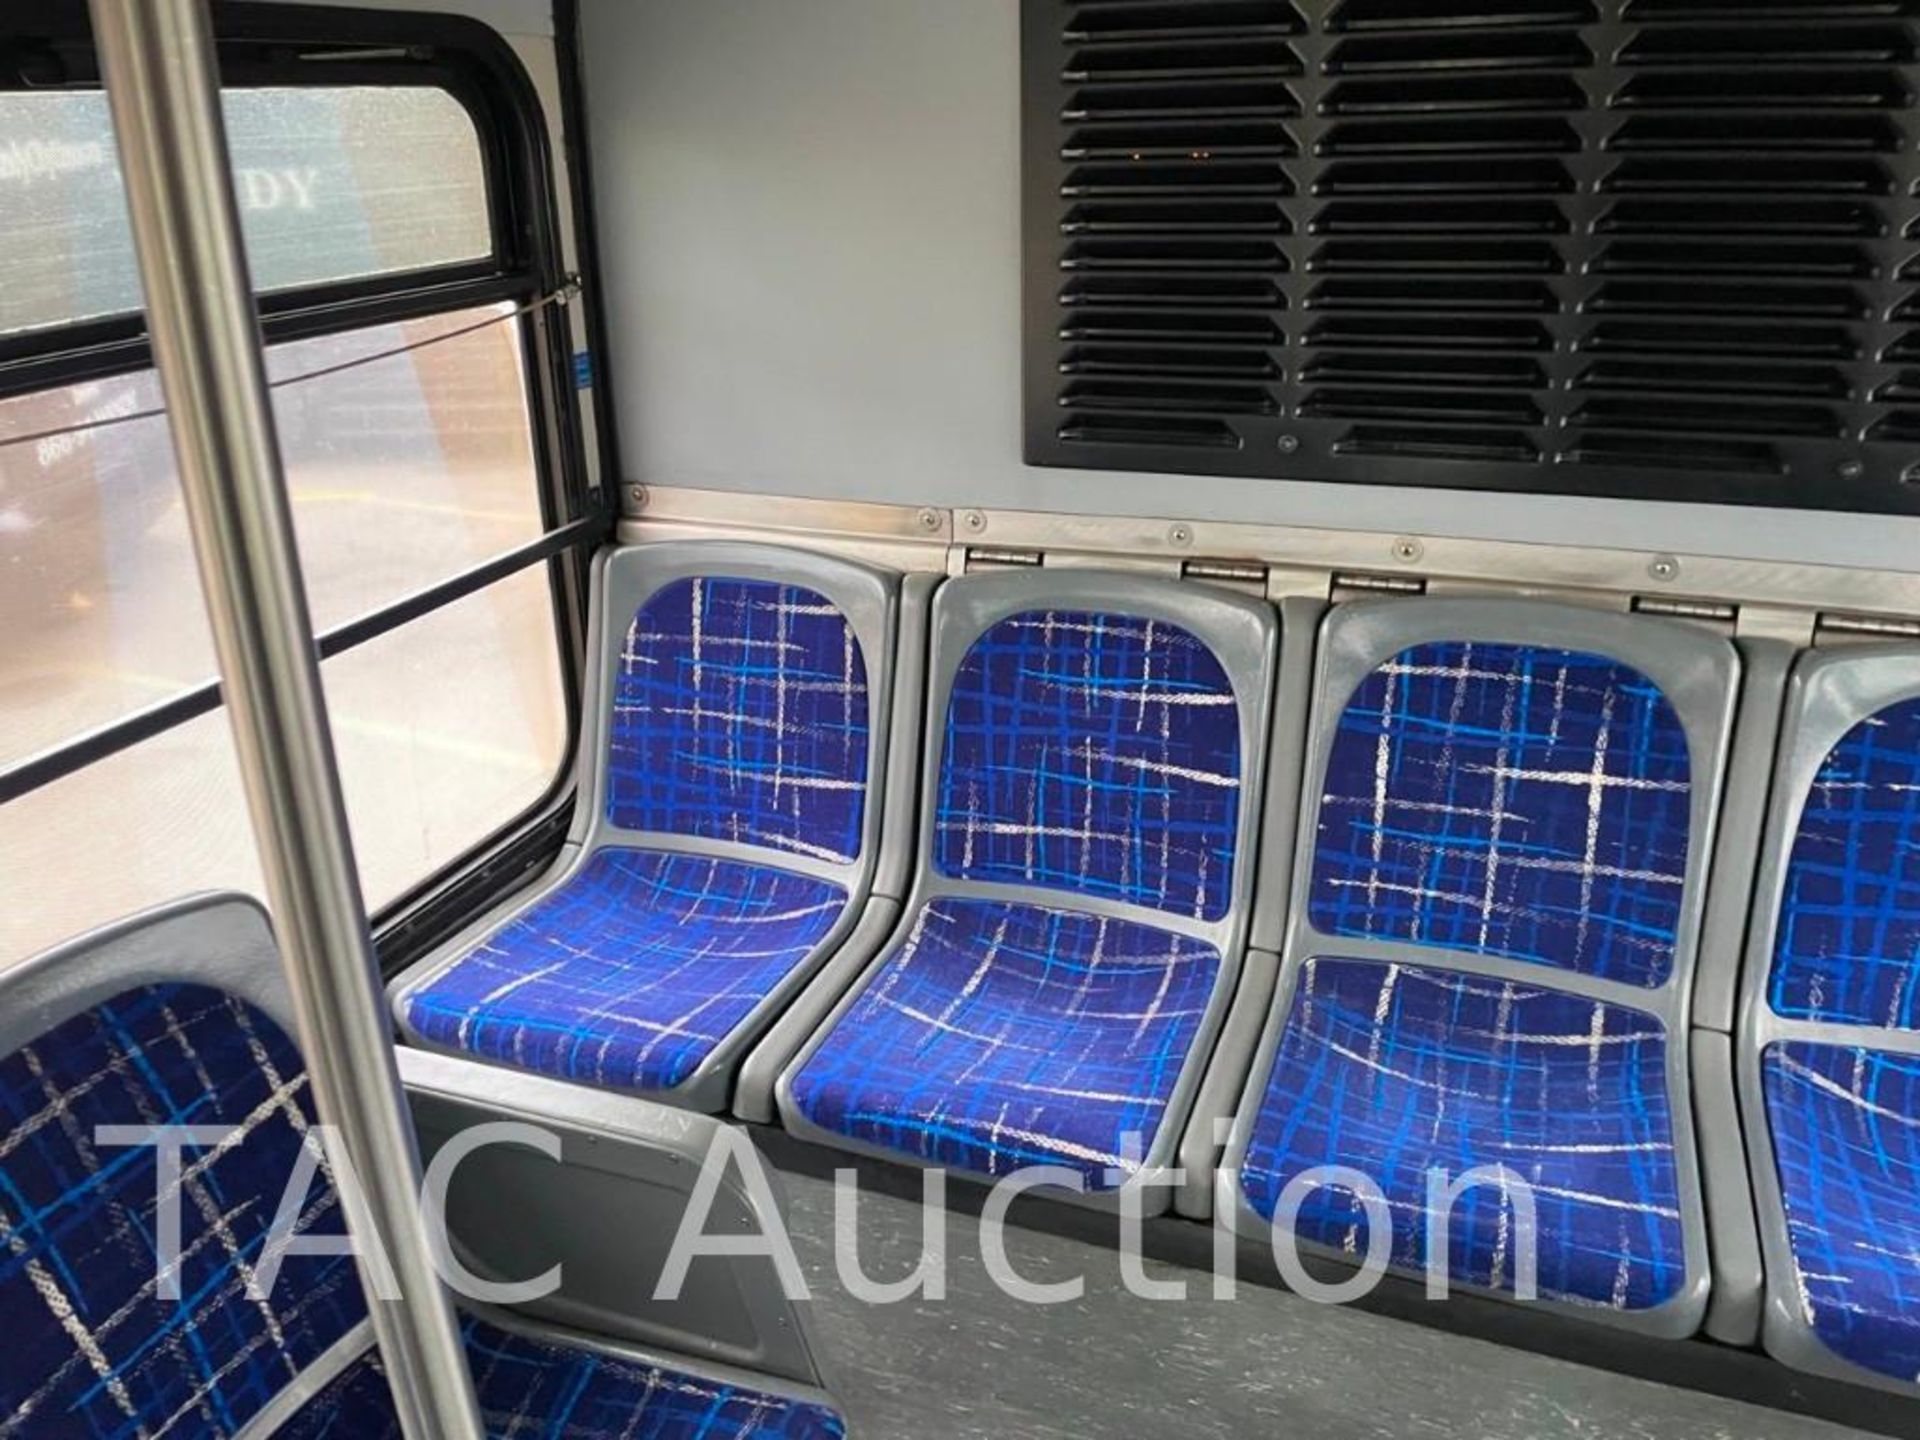 2005 Gillig Low Floor (40) Passenger Coach Transit Bus - Image 58 of 91